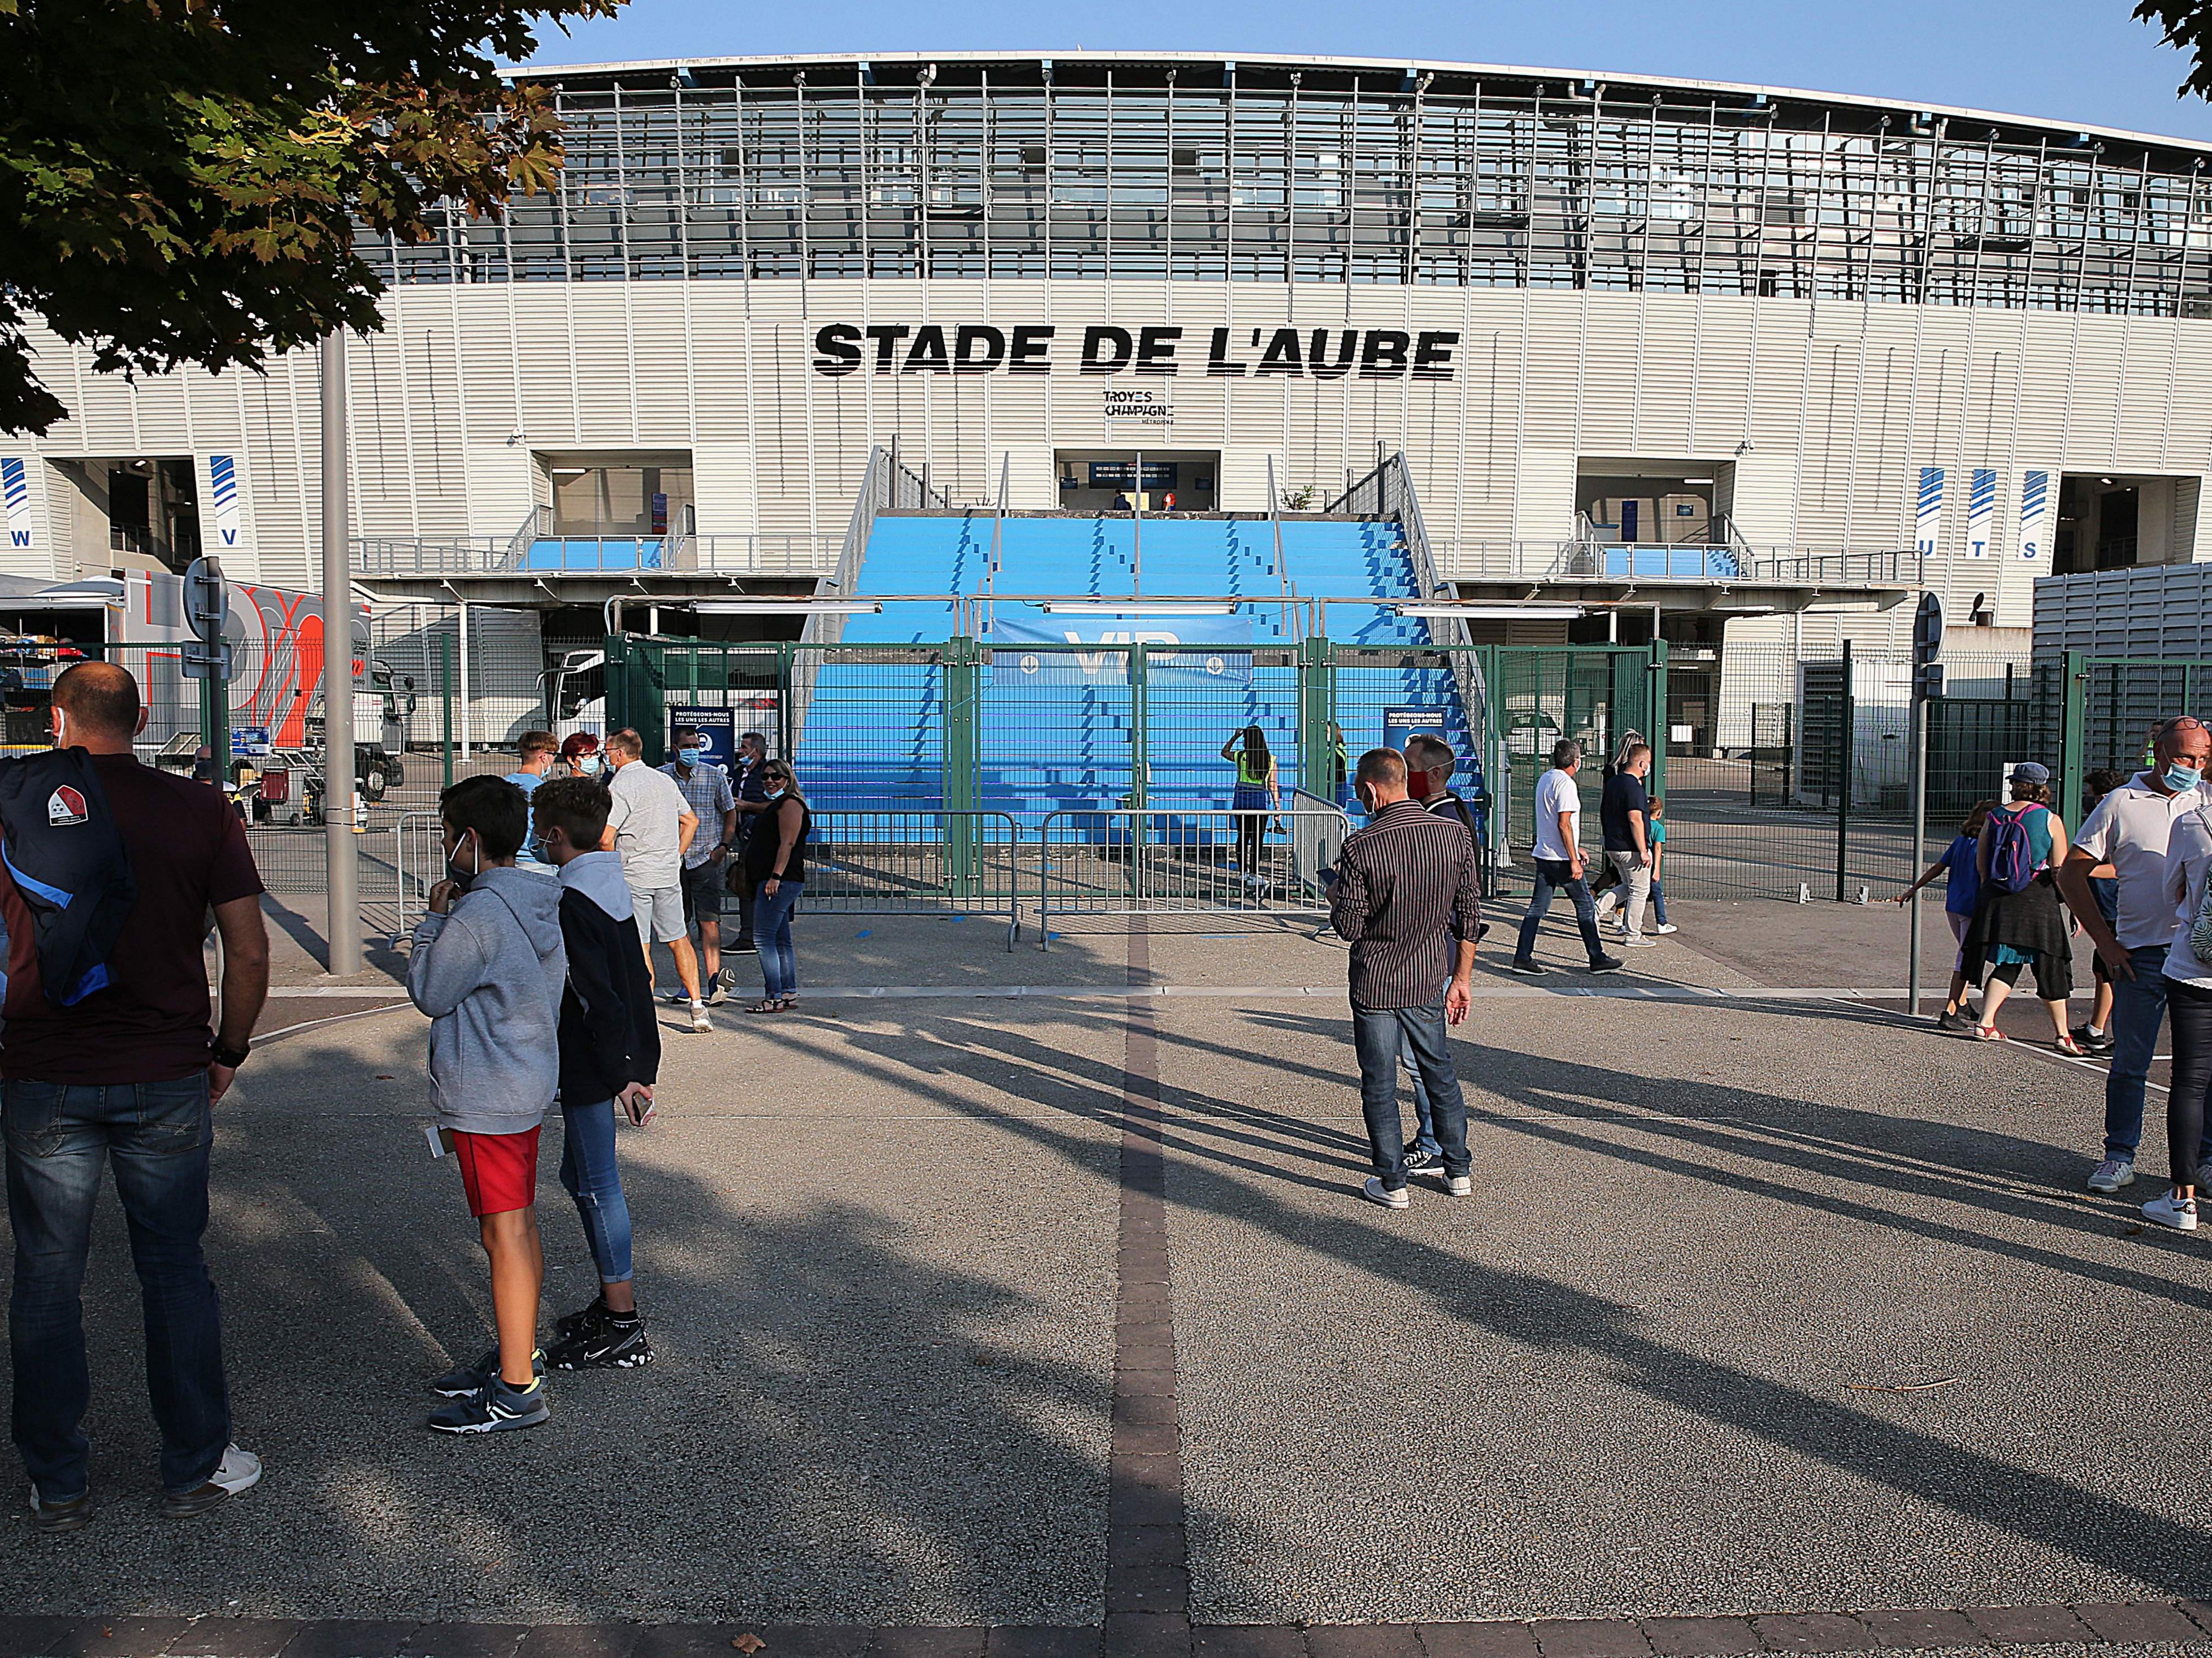 A general view of the Stade de l’Aube